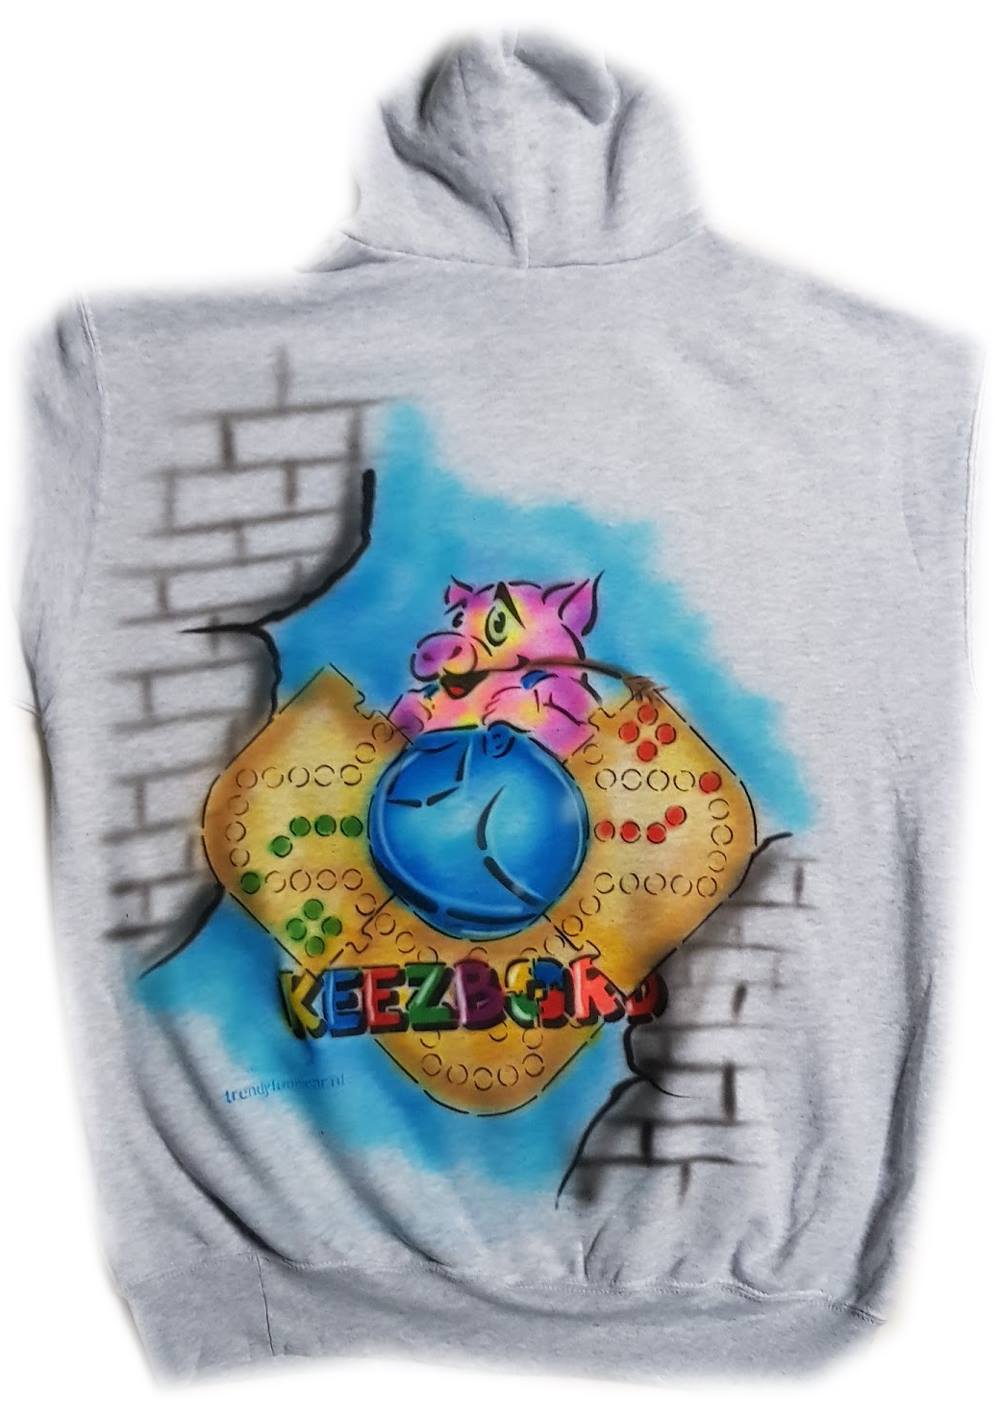 Keezbord Sweater (1)